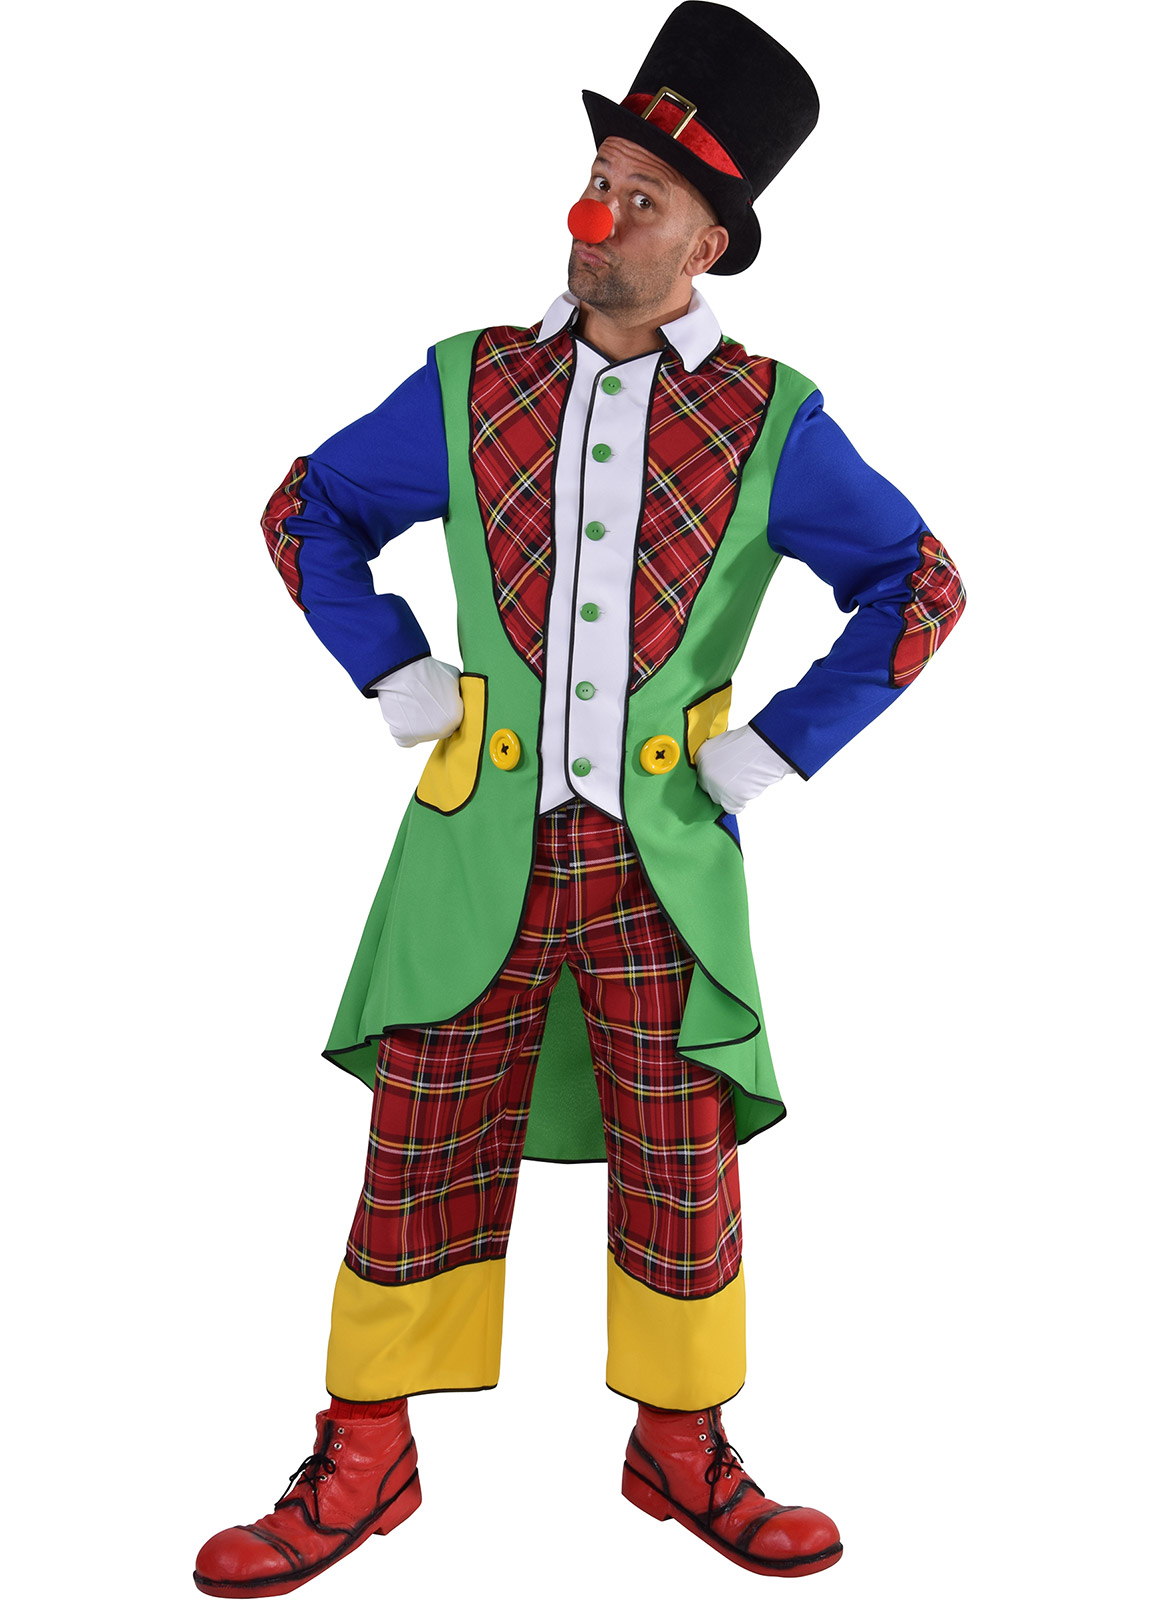 Meneer Clown Pipo - Willaert, verkleedkledij, carnavalkledij, carnavaloutfit, feestkledij, circus, clown